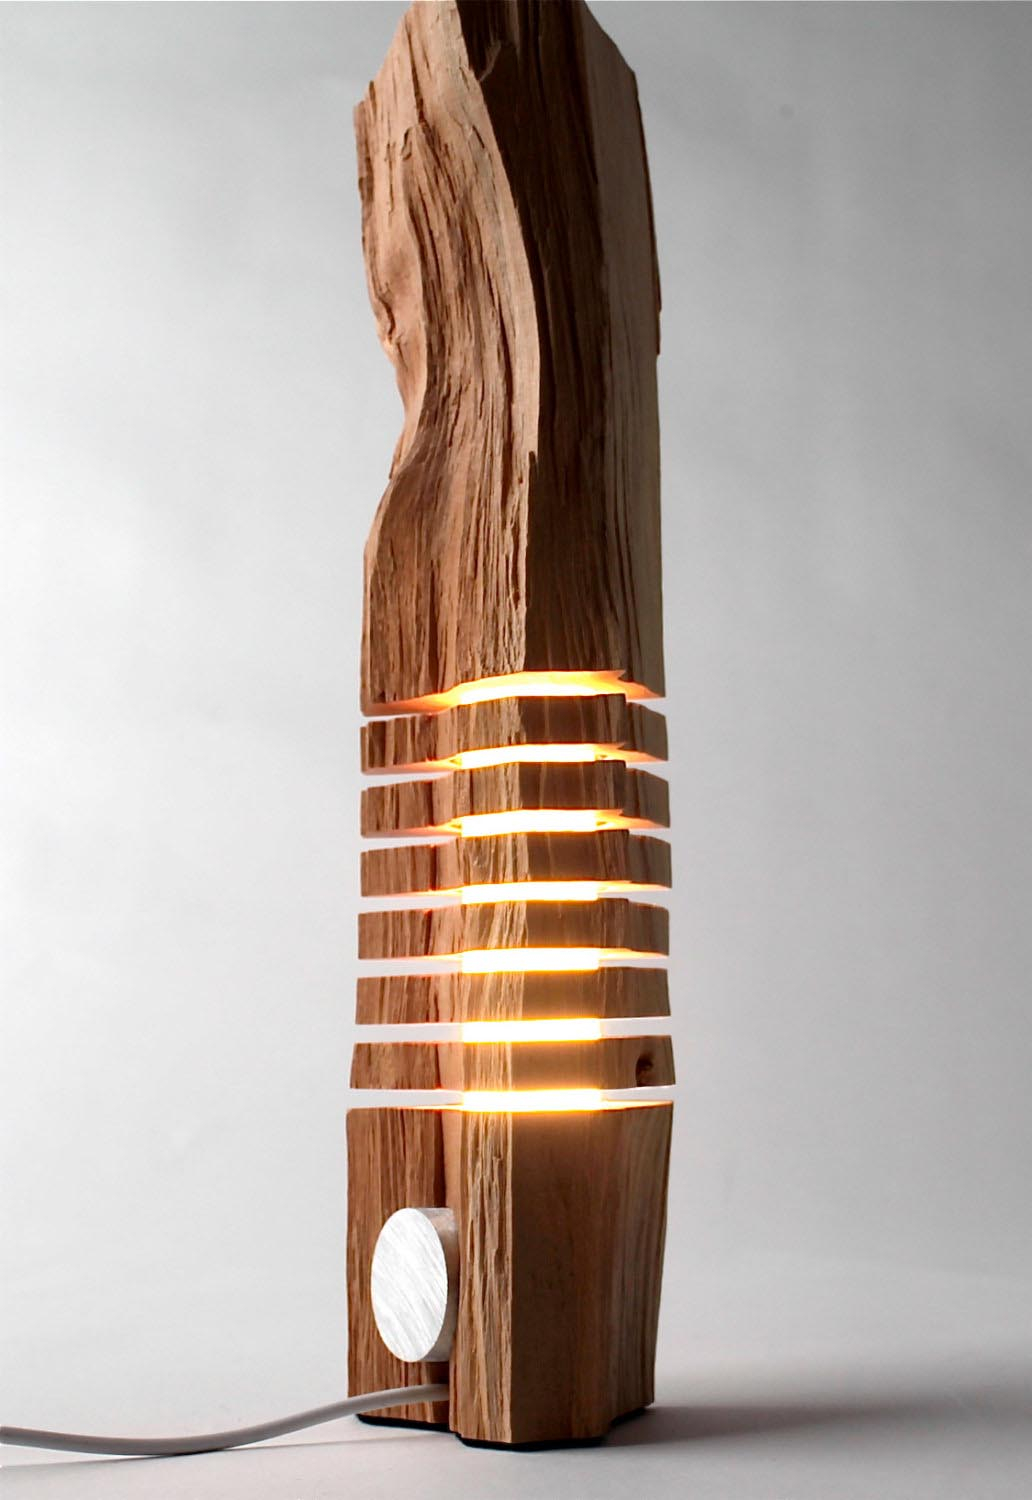 Rustic Wooden Floor Lamps Light Fixtures Design Ideas inside sizing 1032 X 1500